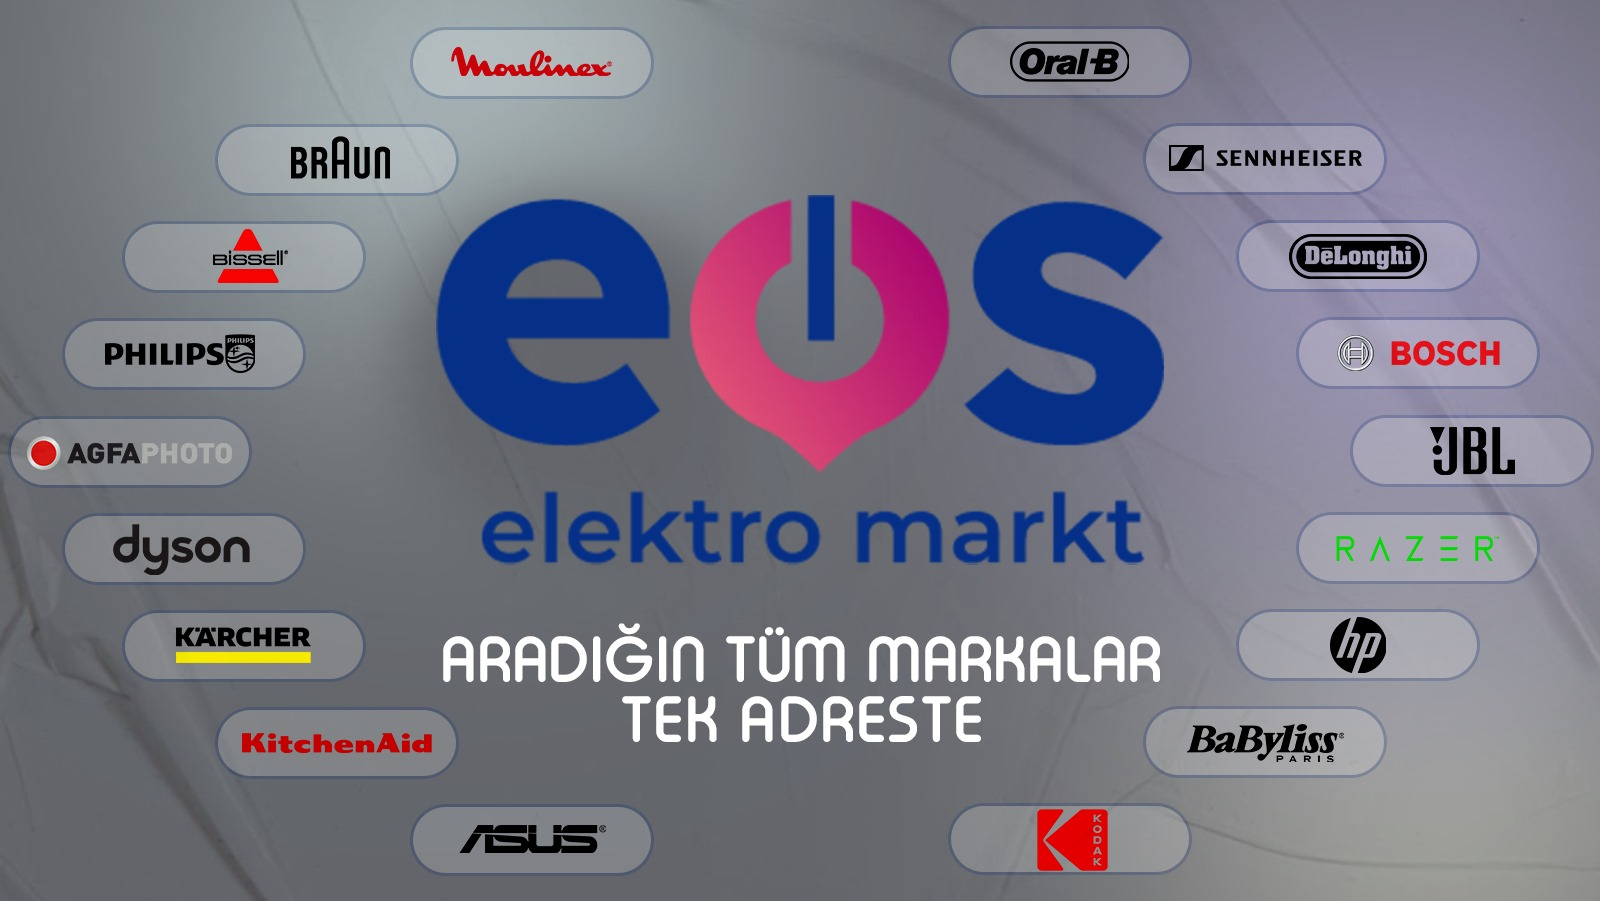 Almanya'dan Gelen Teknoloji Deneyimi Eos Markt!